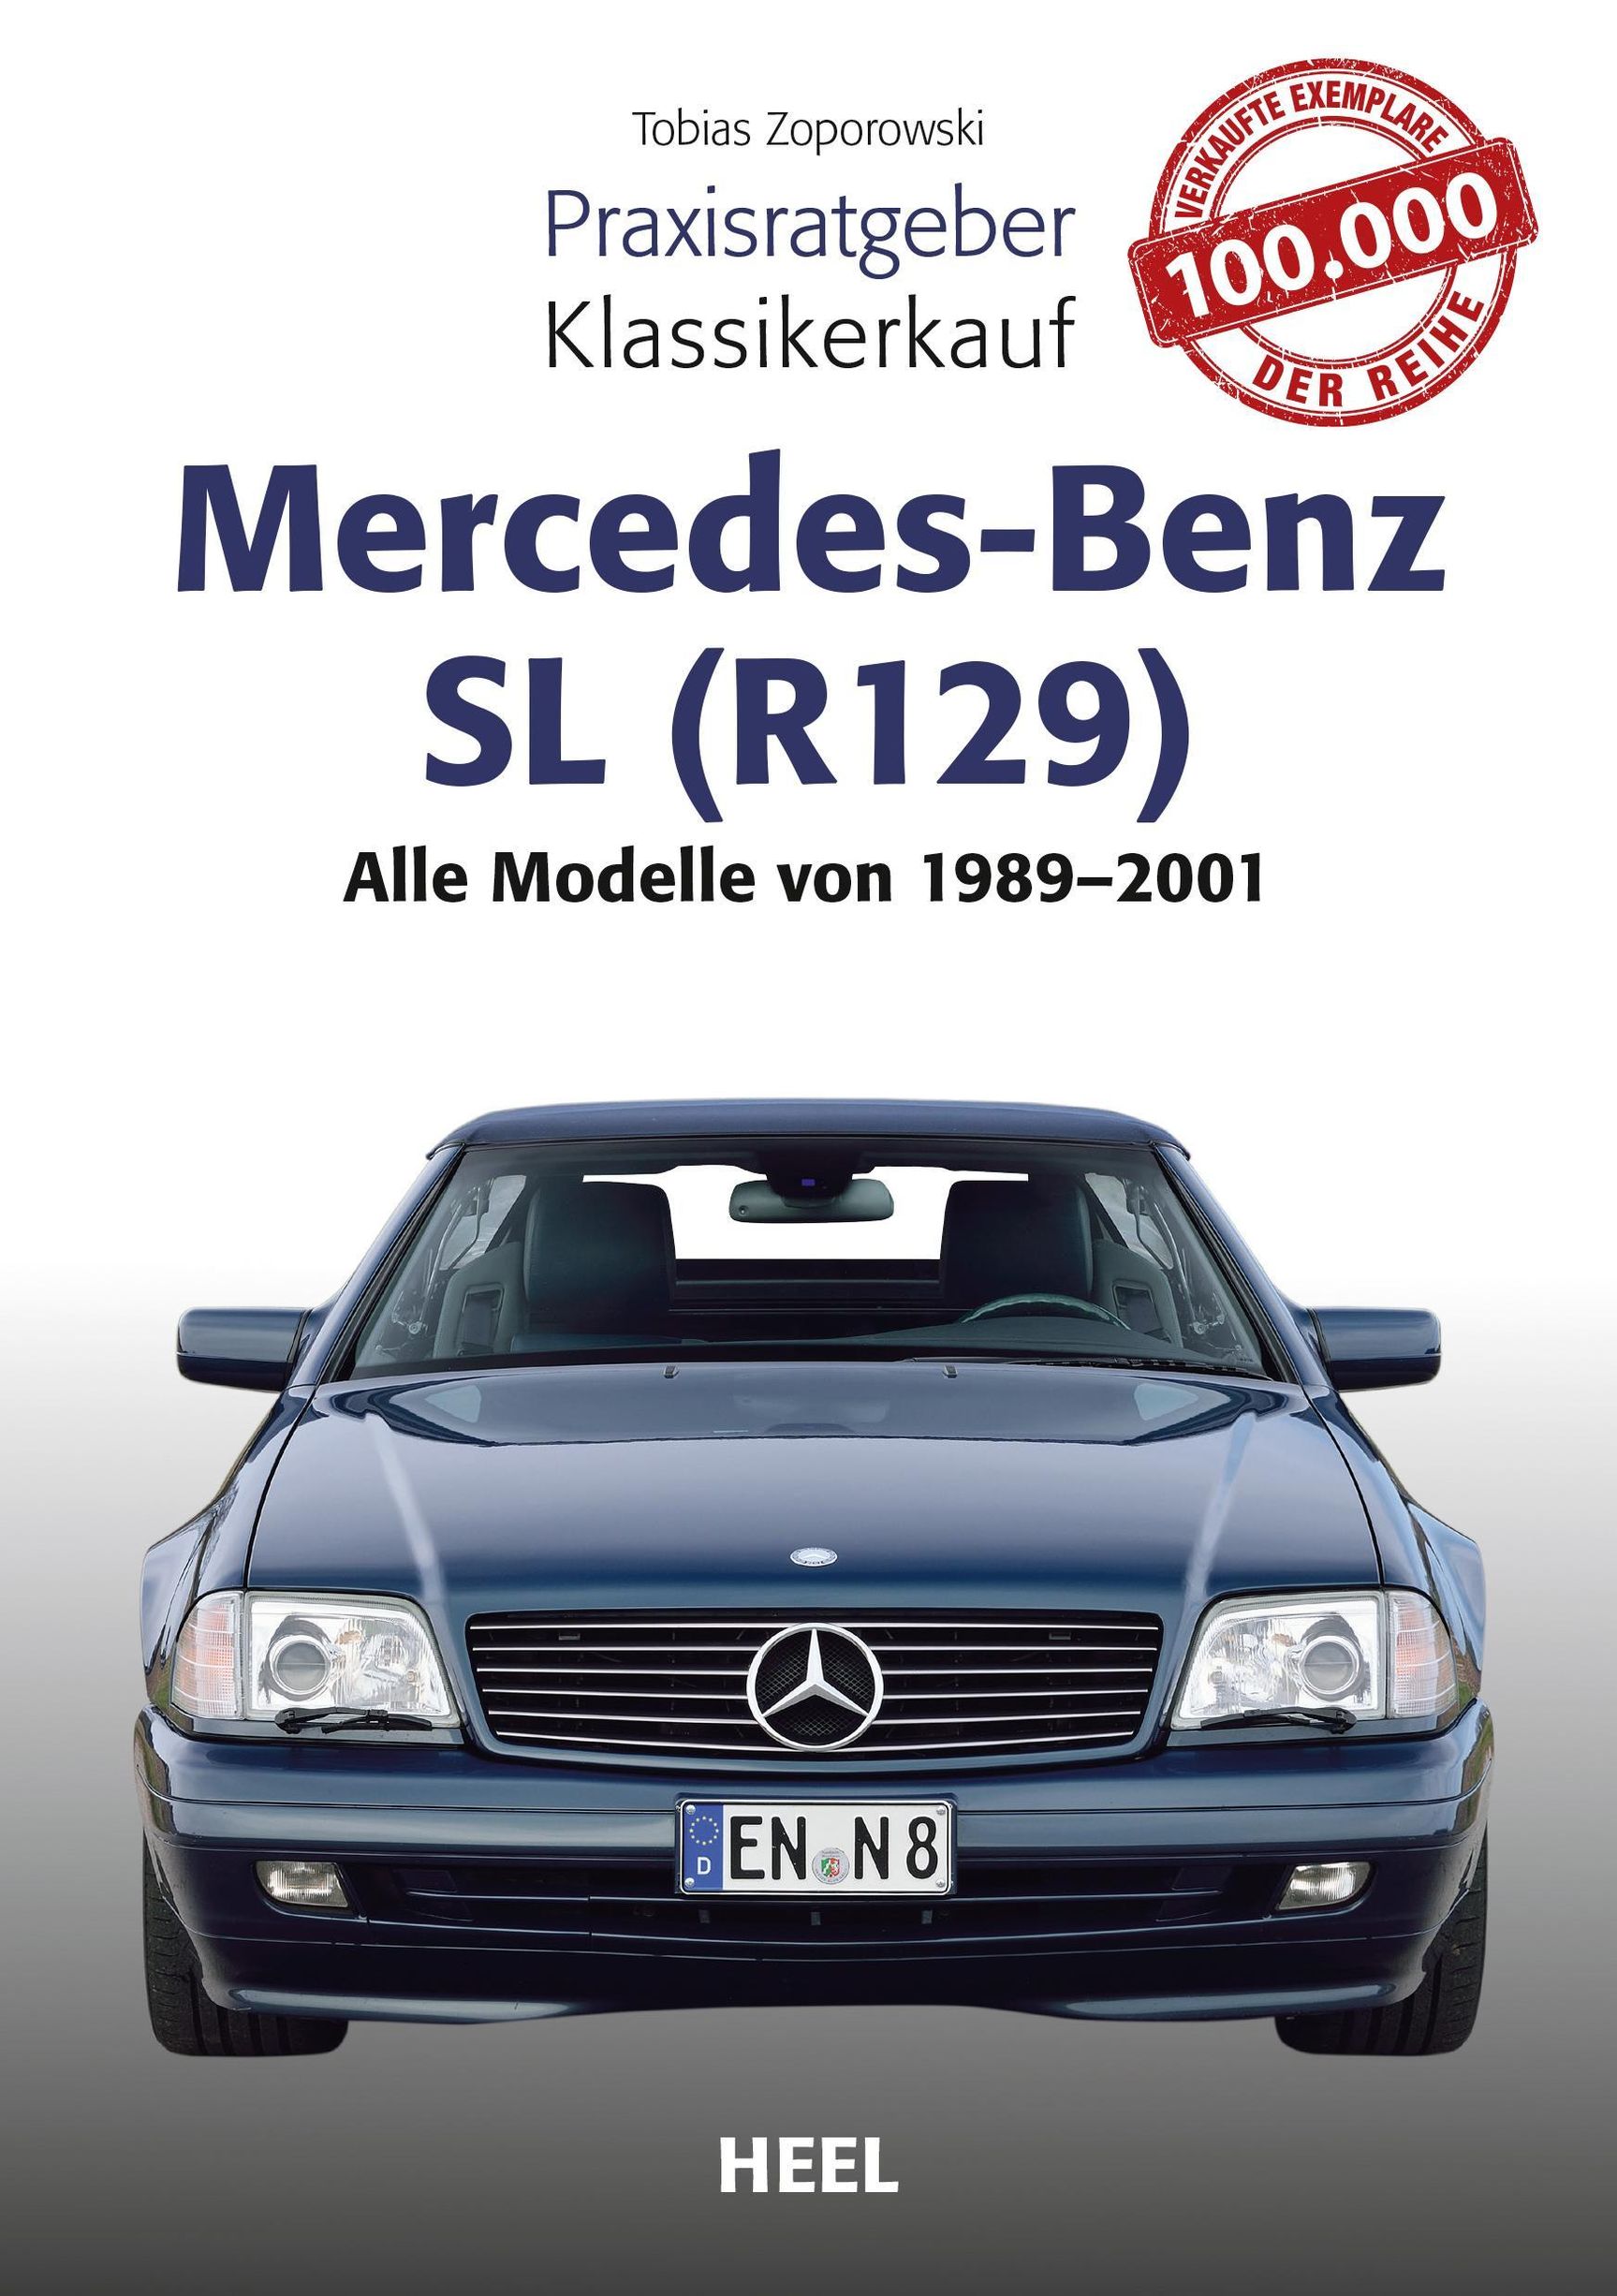 Praxisratgeber Klassikerkauf Mercedes-Benz SL R129 Praxisratgeber  Klassikerkauf eBook v. Tobias Zoporowski